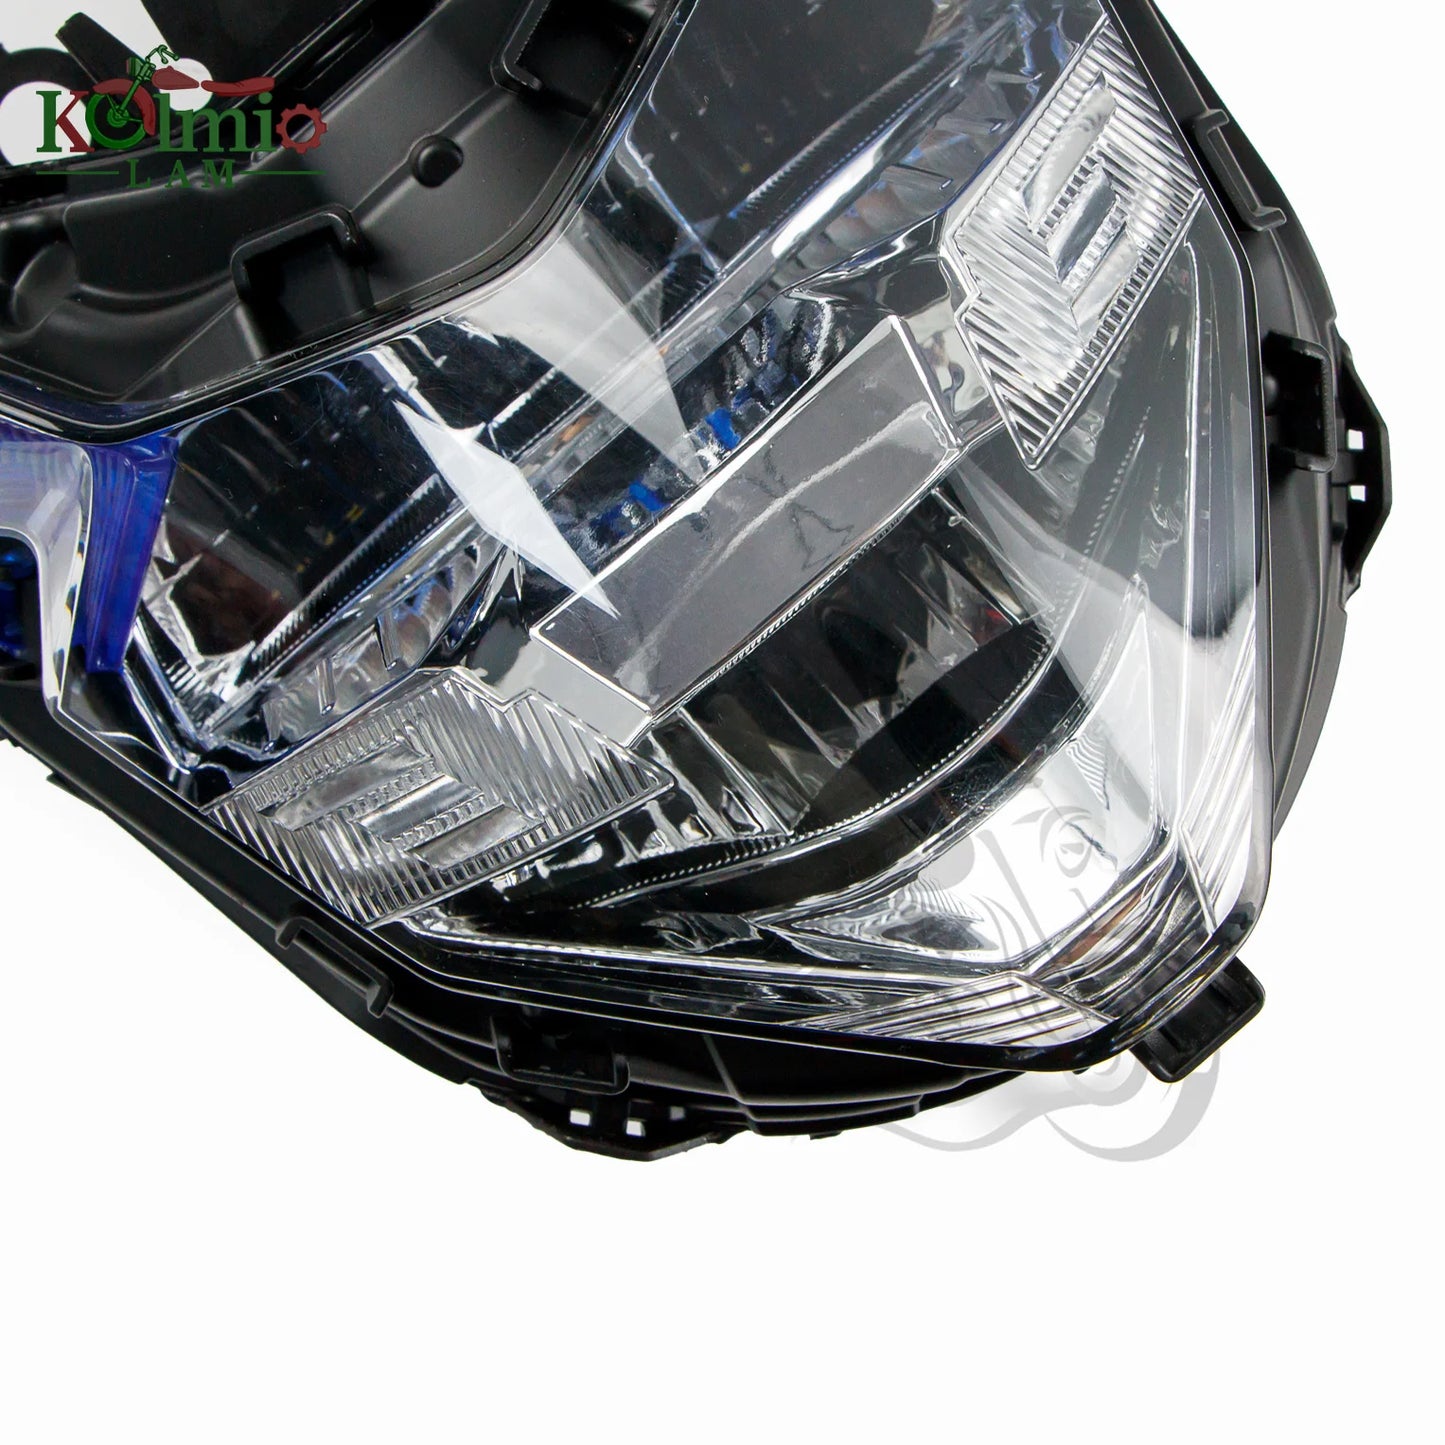 Fit for 2018 - 2021 HONDA CBR650F CB650F Motorcycle Front Headlight Assembly LED Headlamp Head Light CBR 650F CB 650F 2019 2020